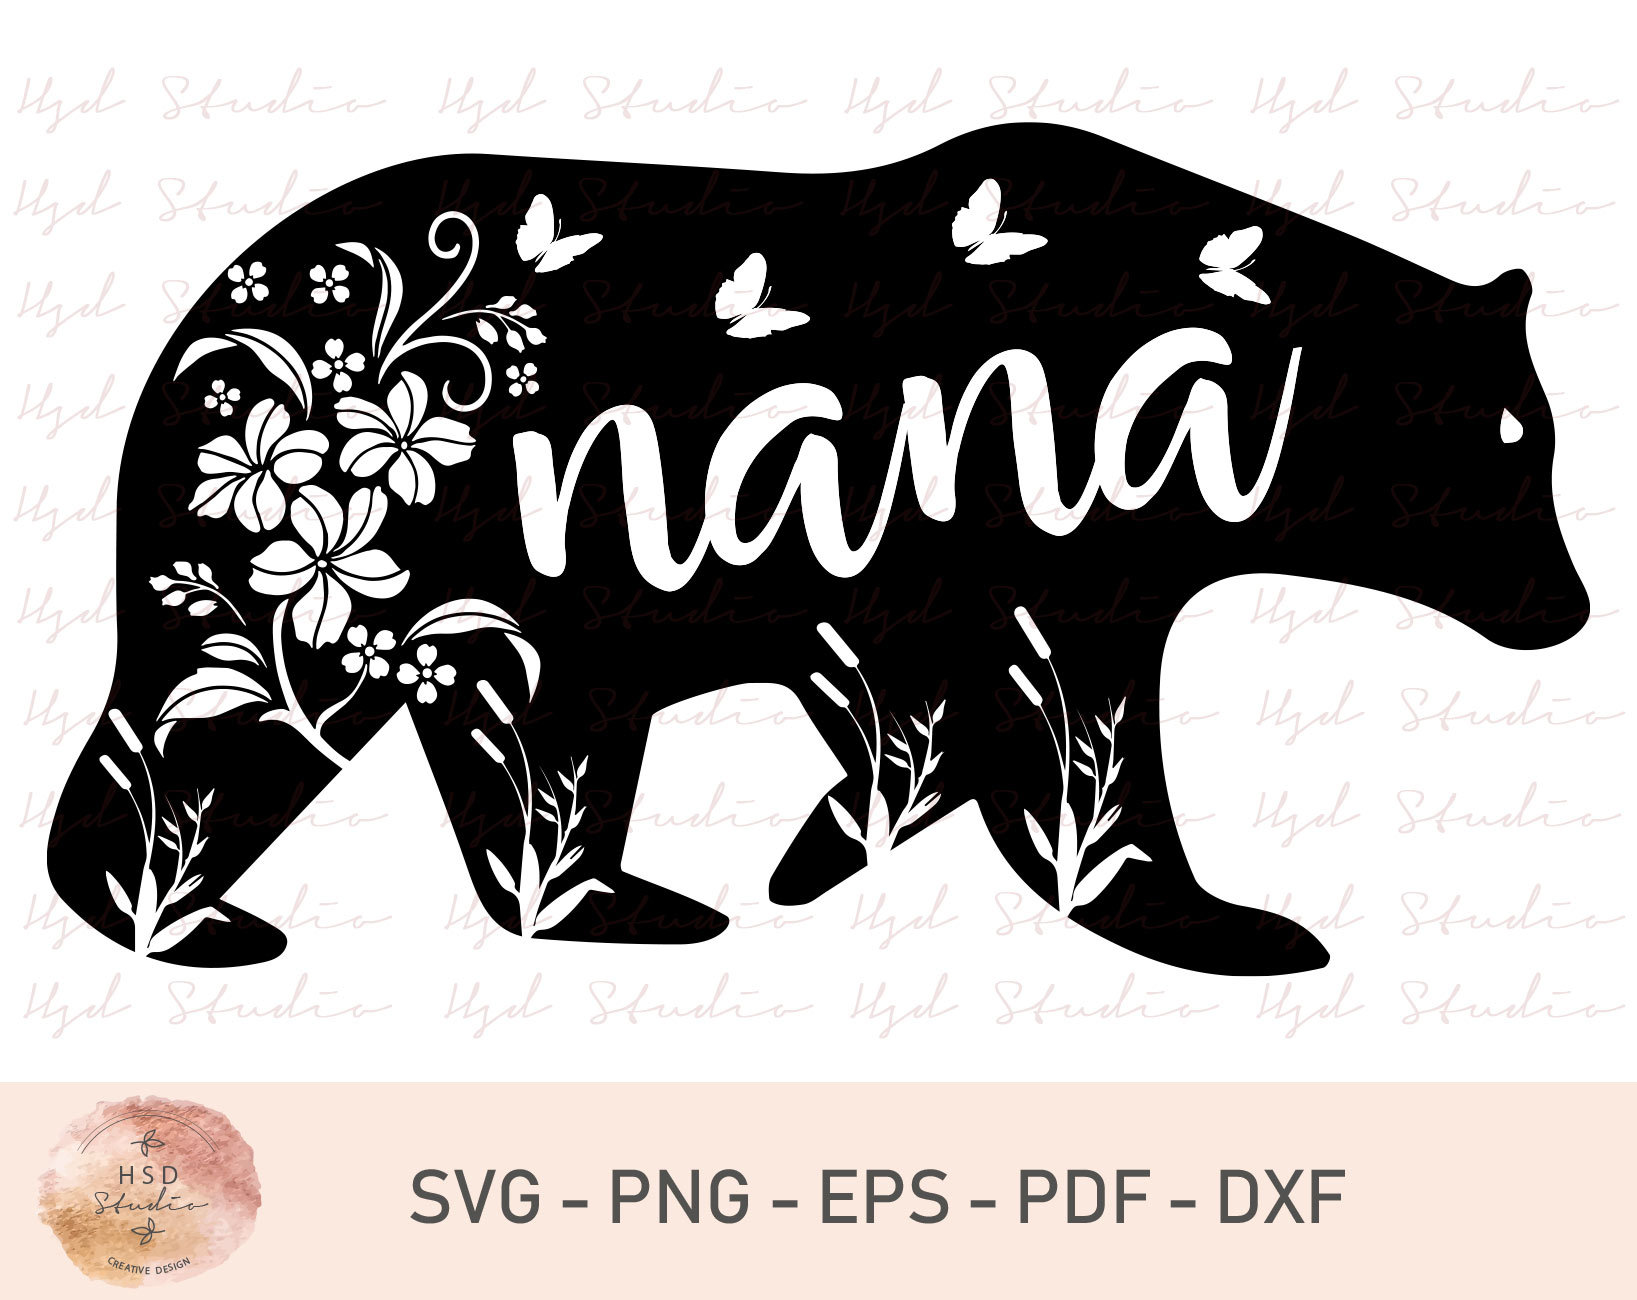 Nana Bear SVG PNG DXF Cut Files For Cricut And Silhouette Etsy Hong Kong